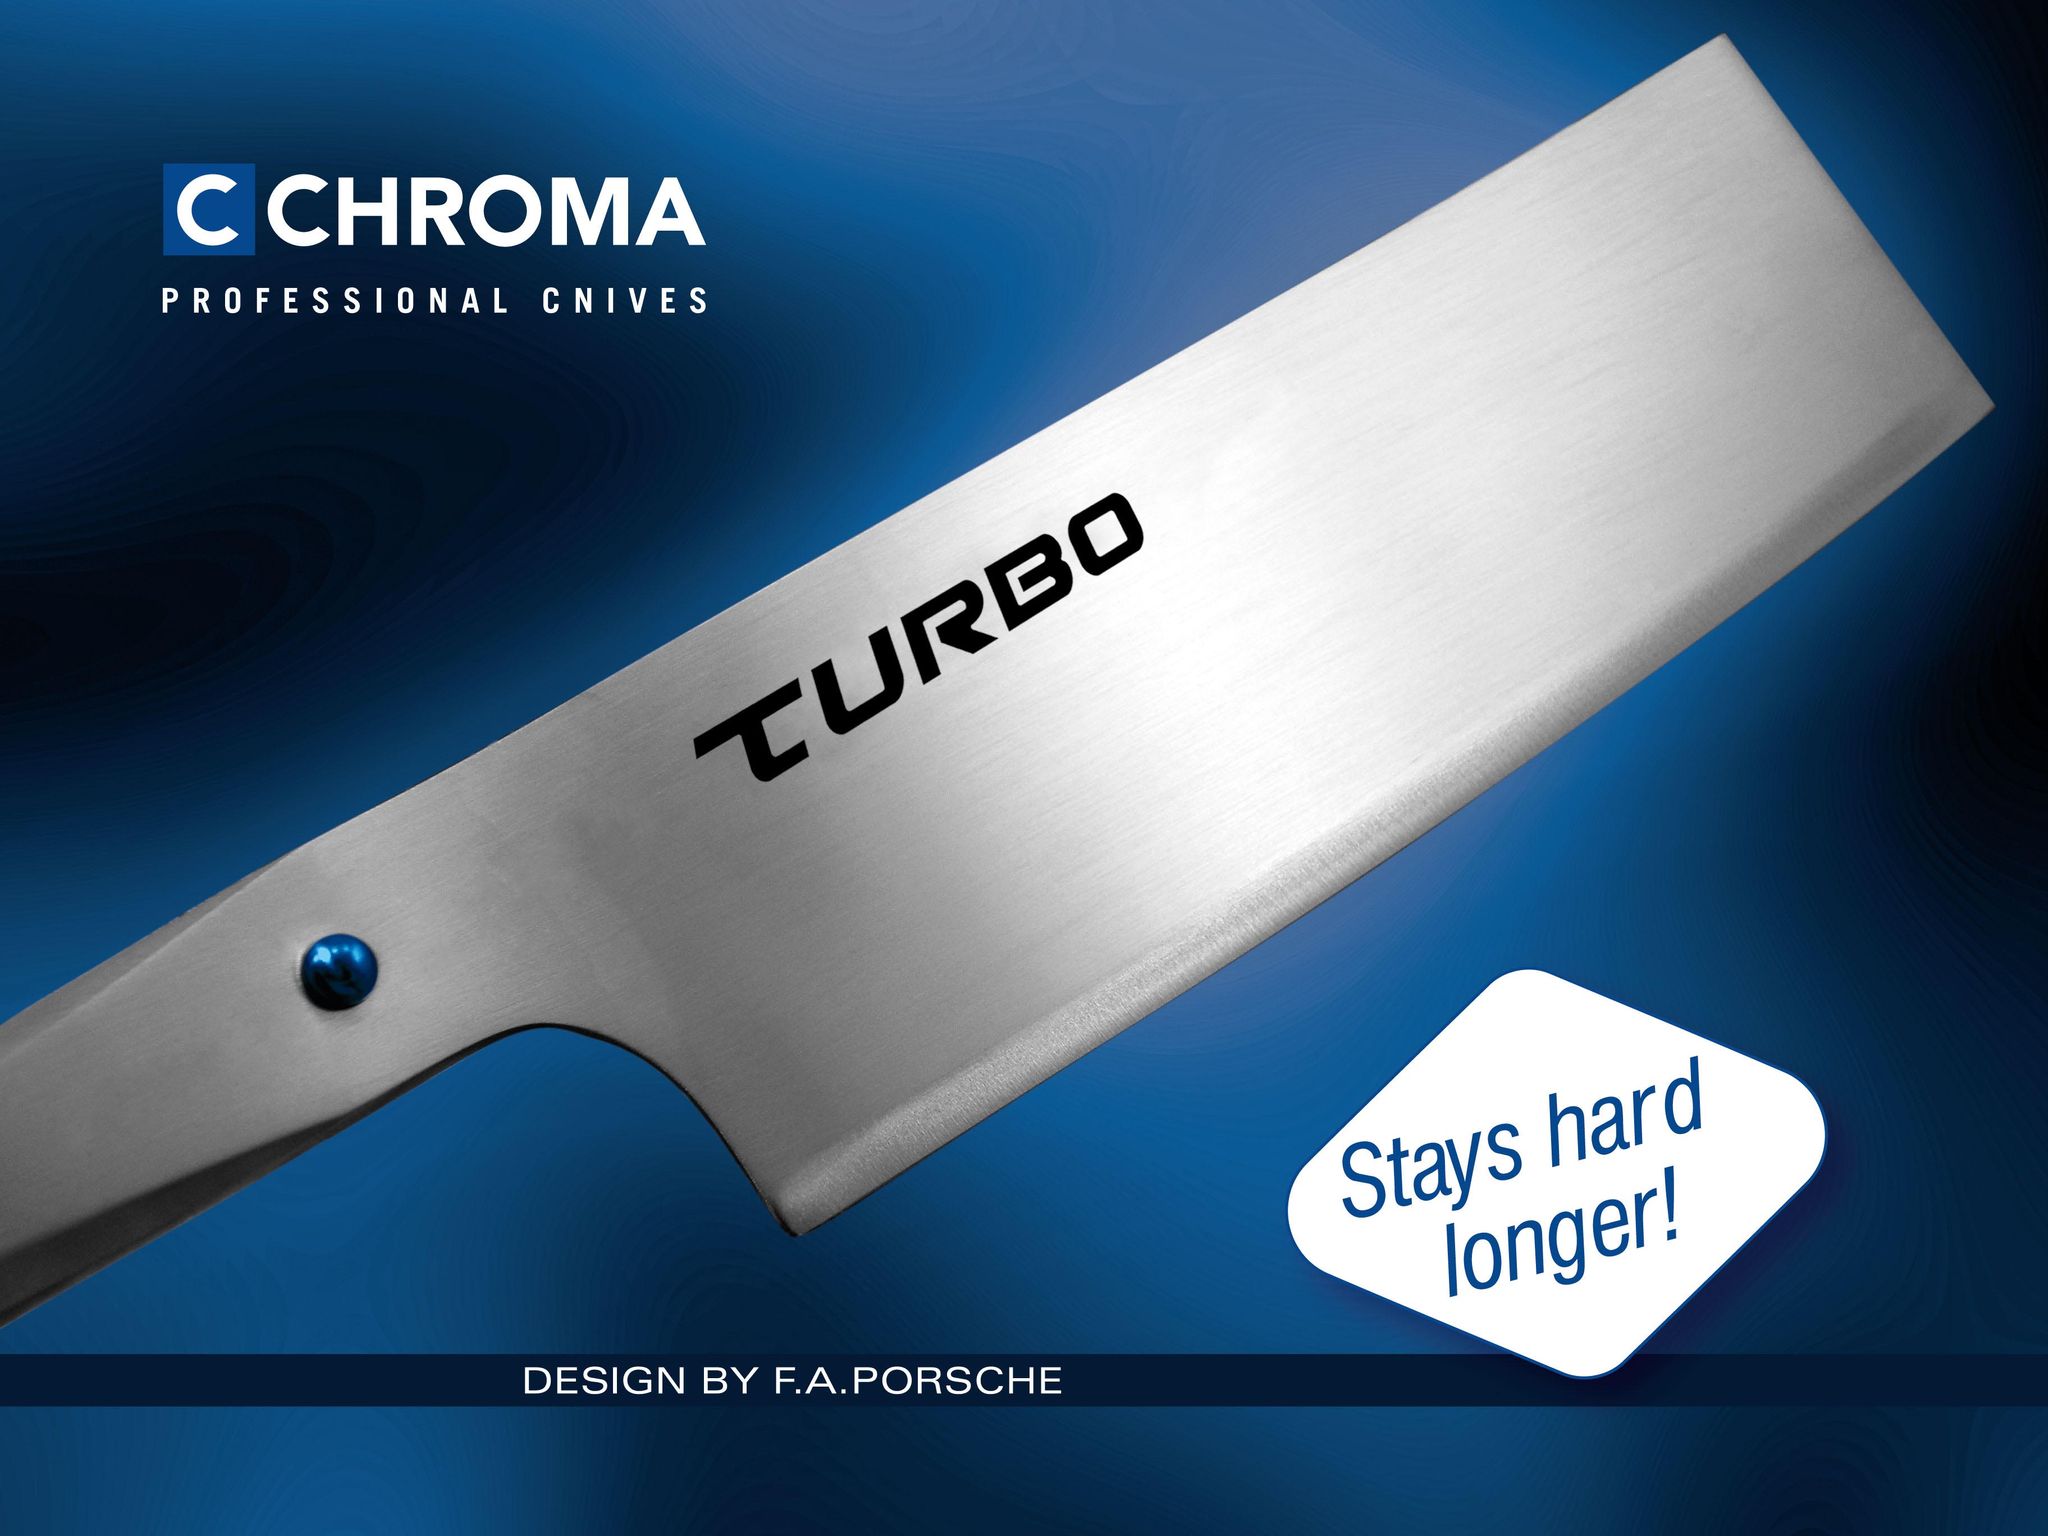 Chroma Turbo 